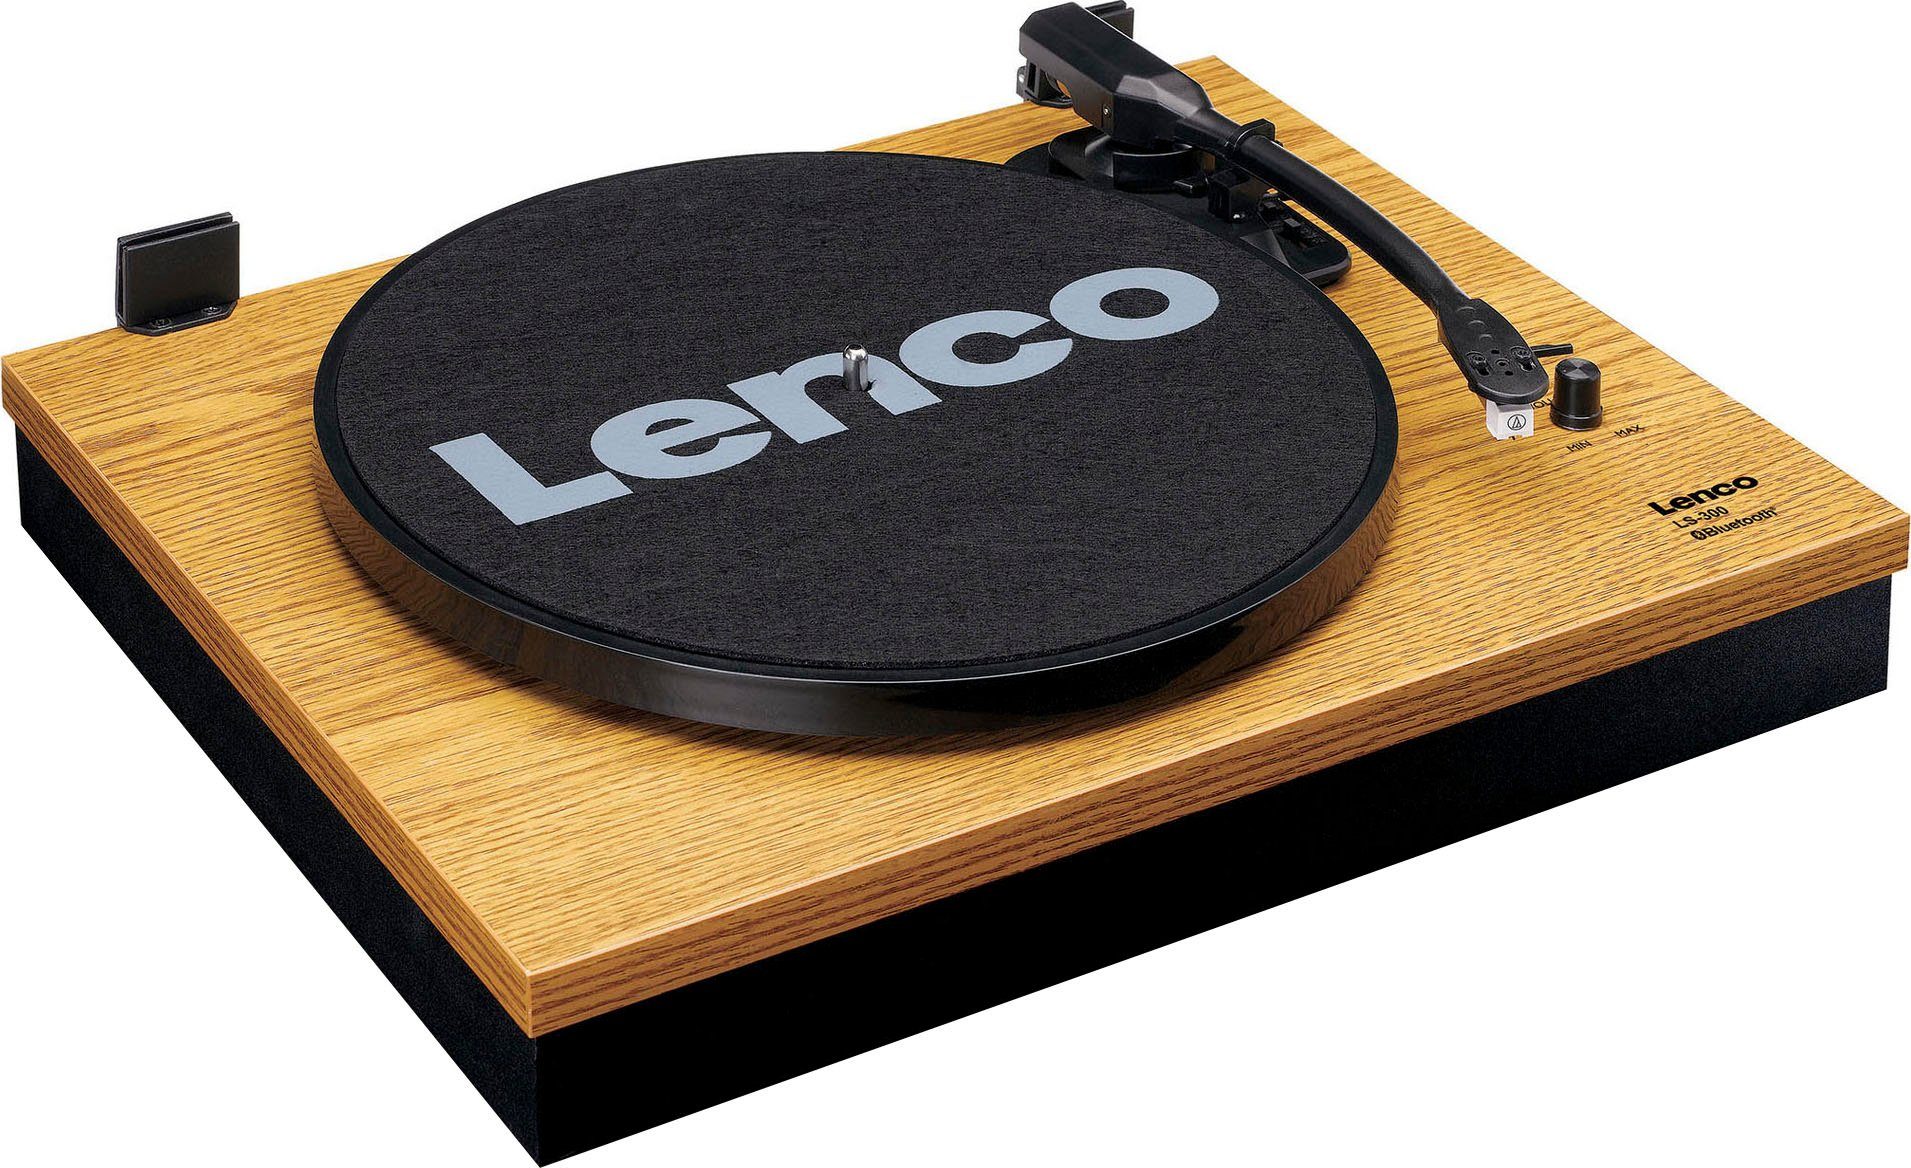 LS-300WD ext. Holz Lenco mit Lautsprechern Plattenspieler (Riemenantrieb) Plattenspieler